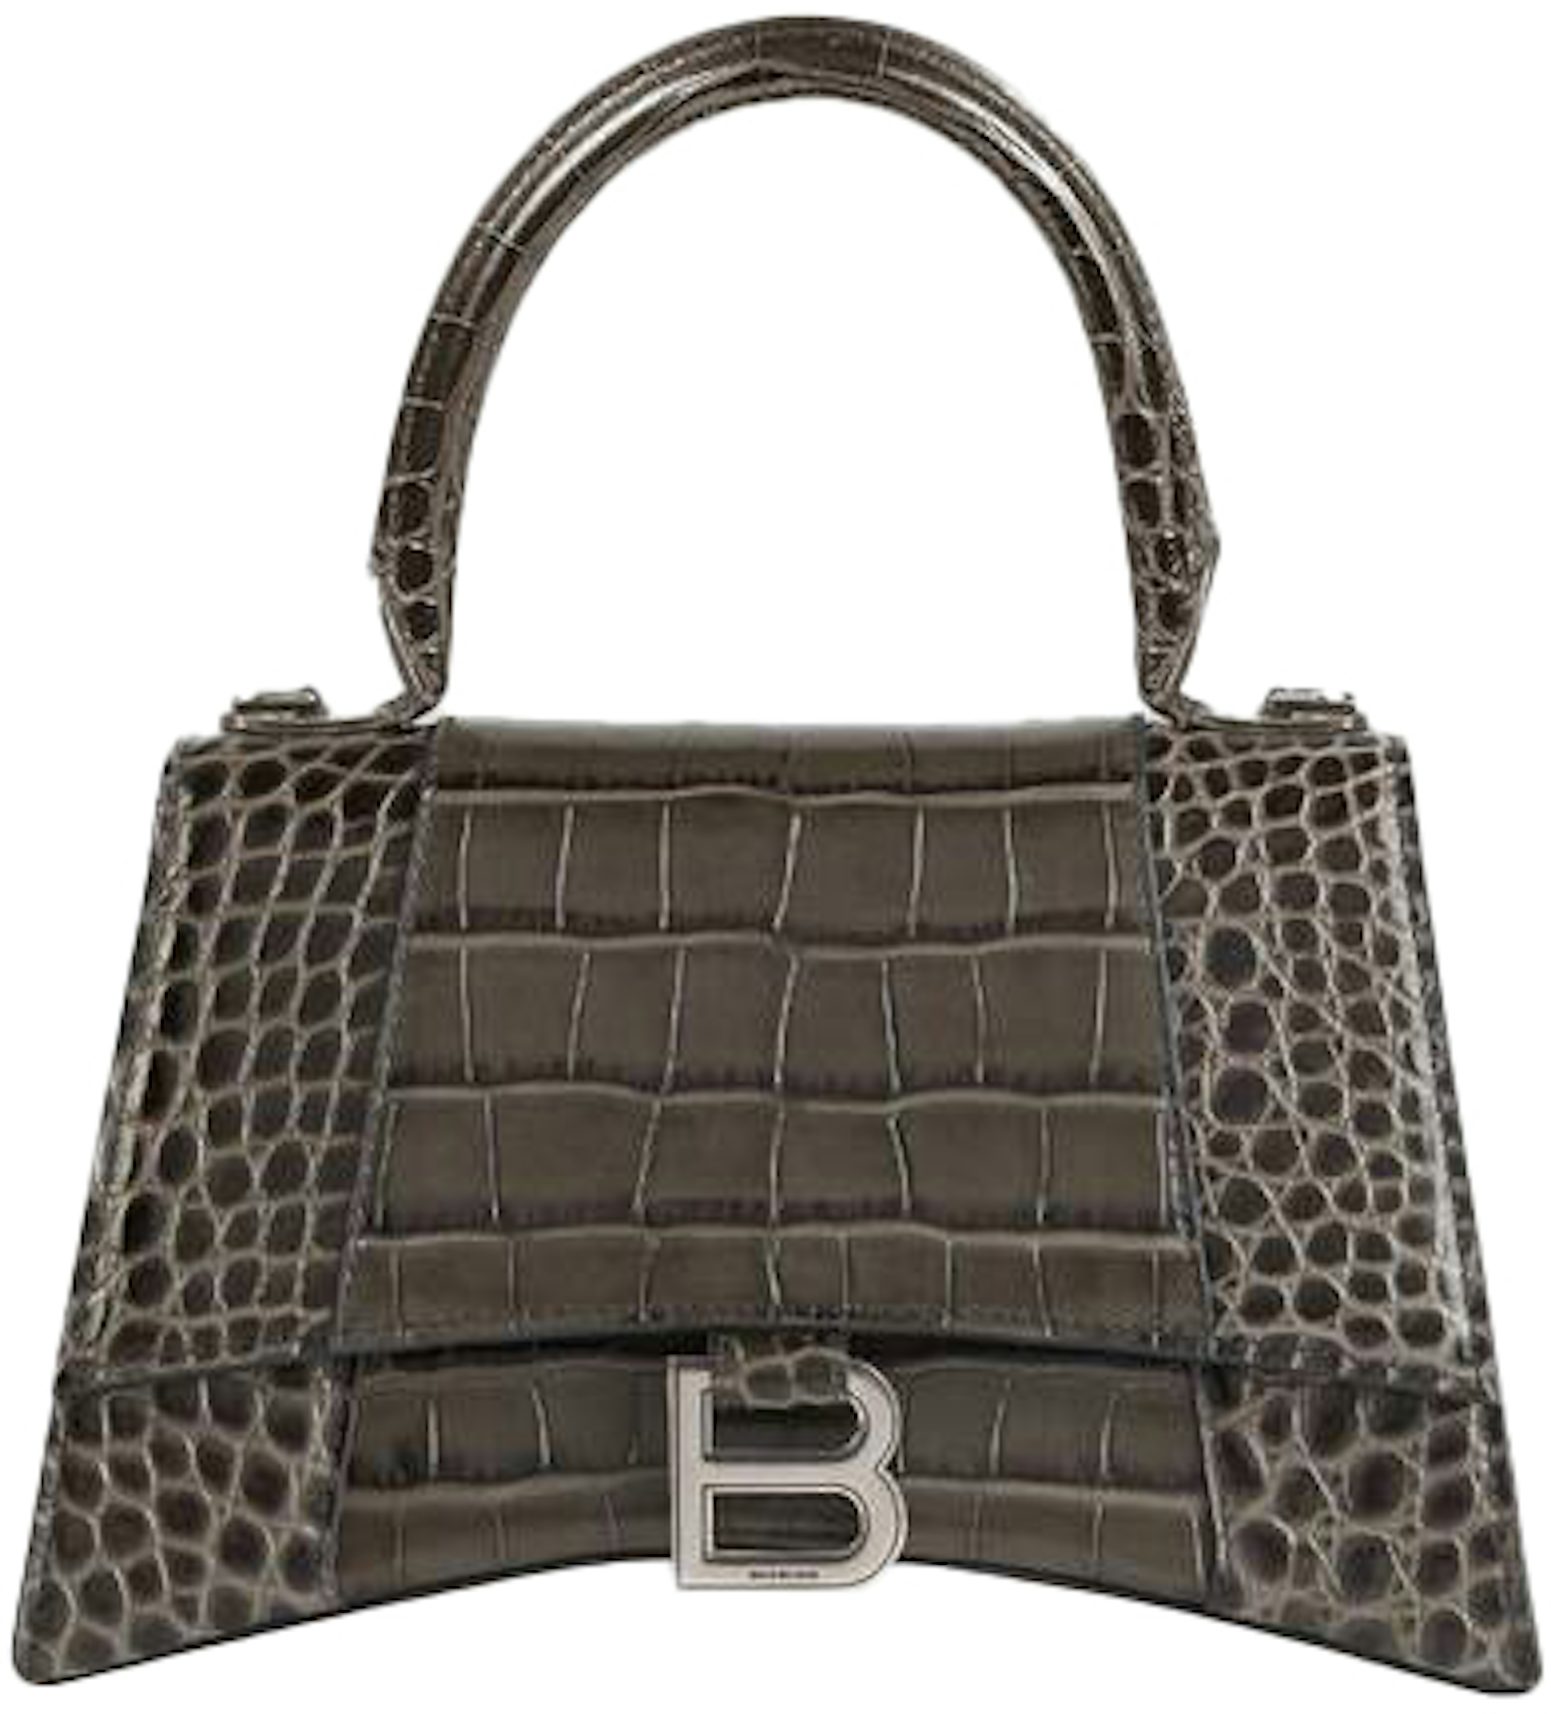 Grey Hourglass S crocodile-effect leather bag, Balenciaga